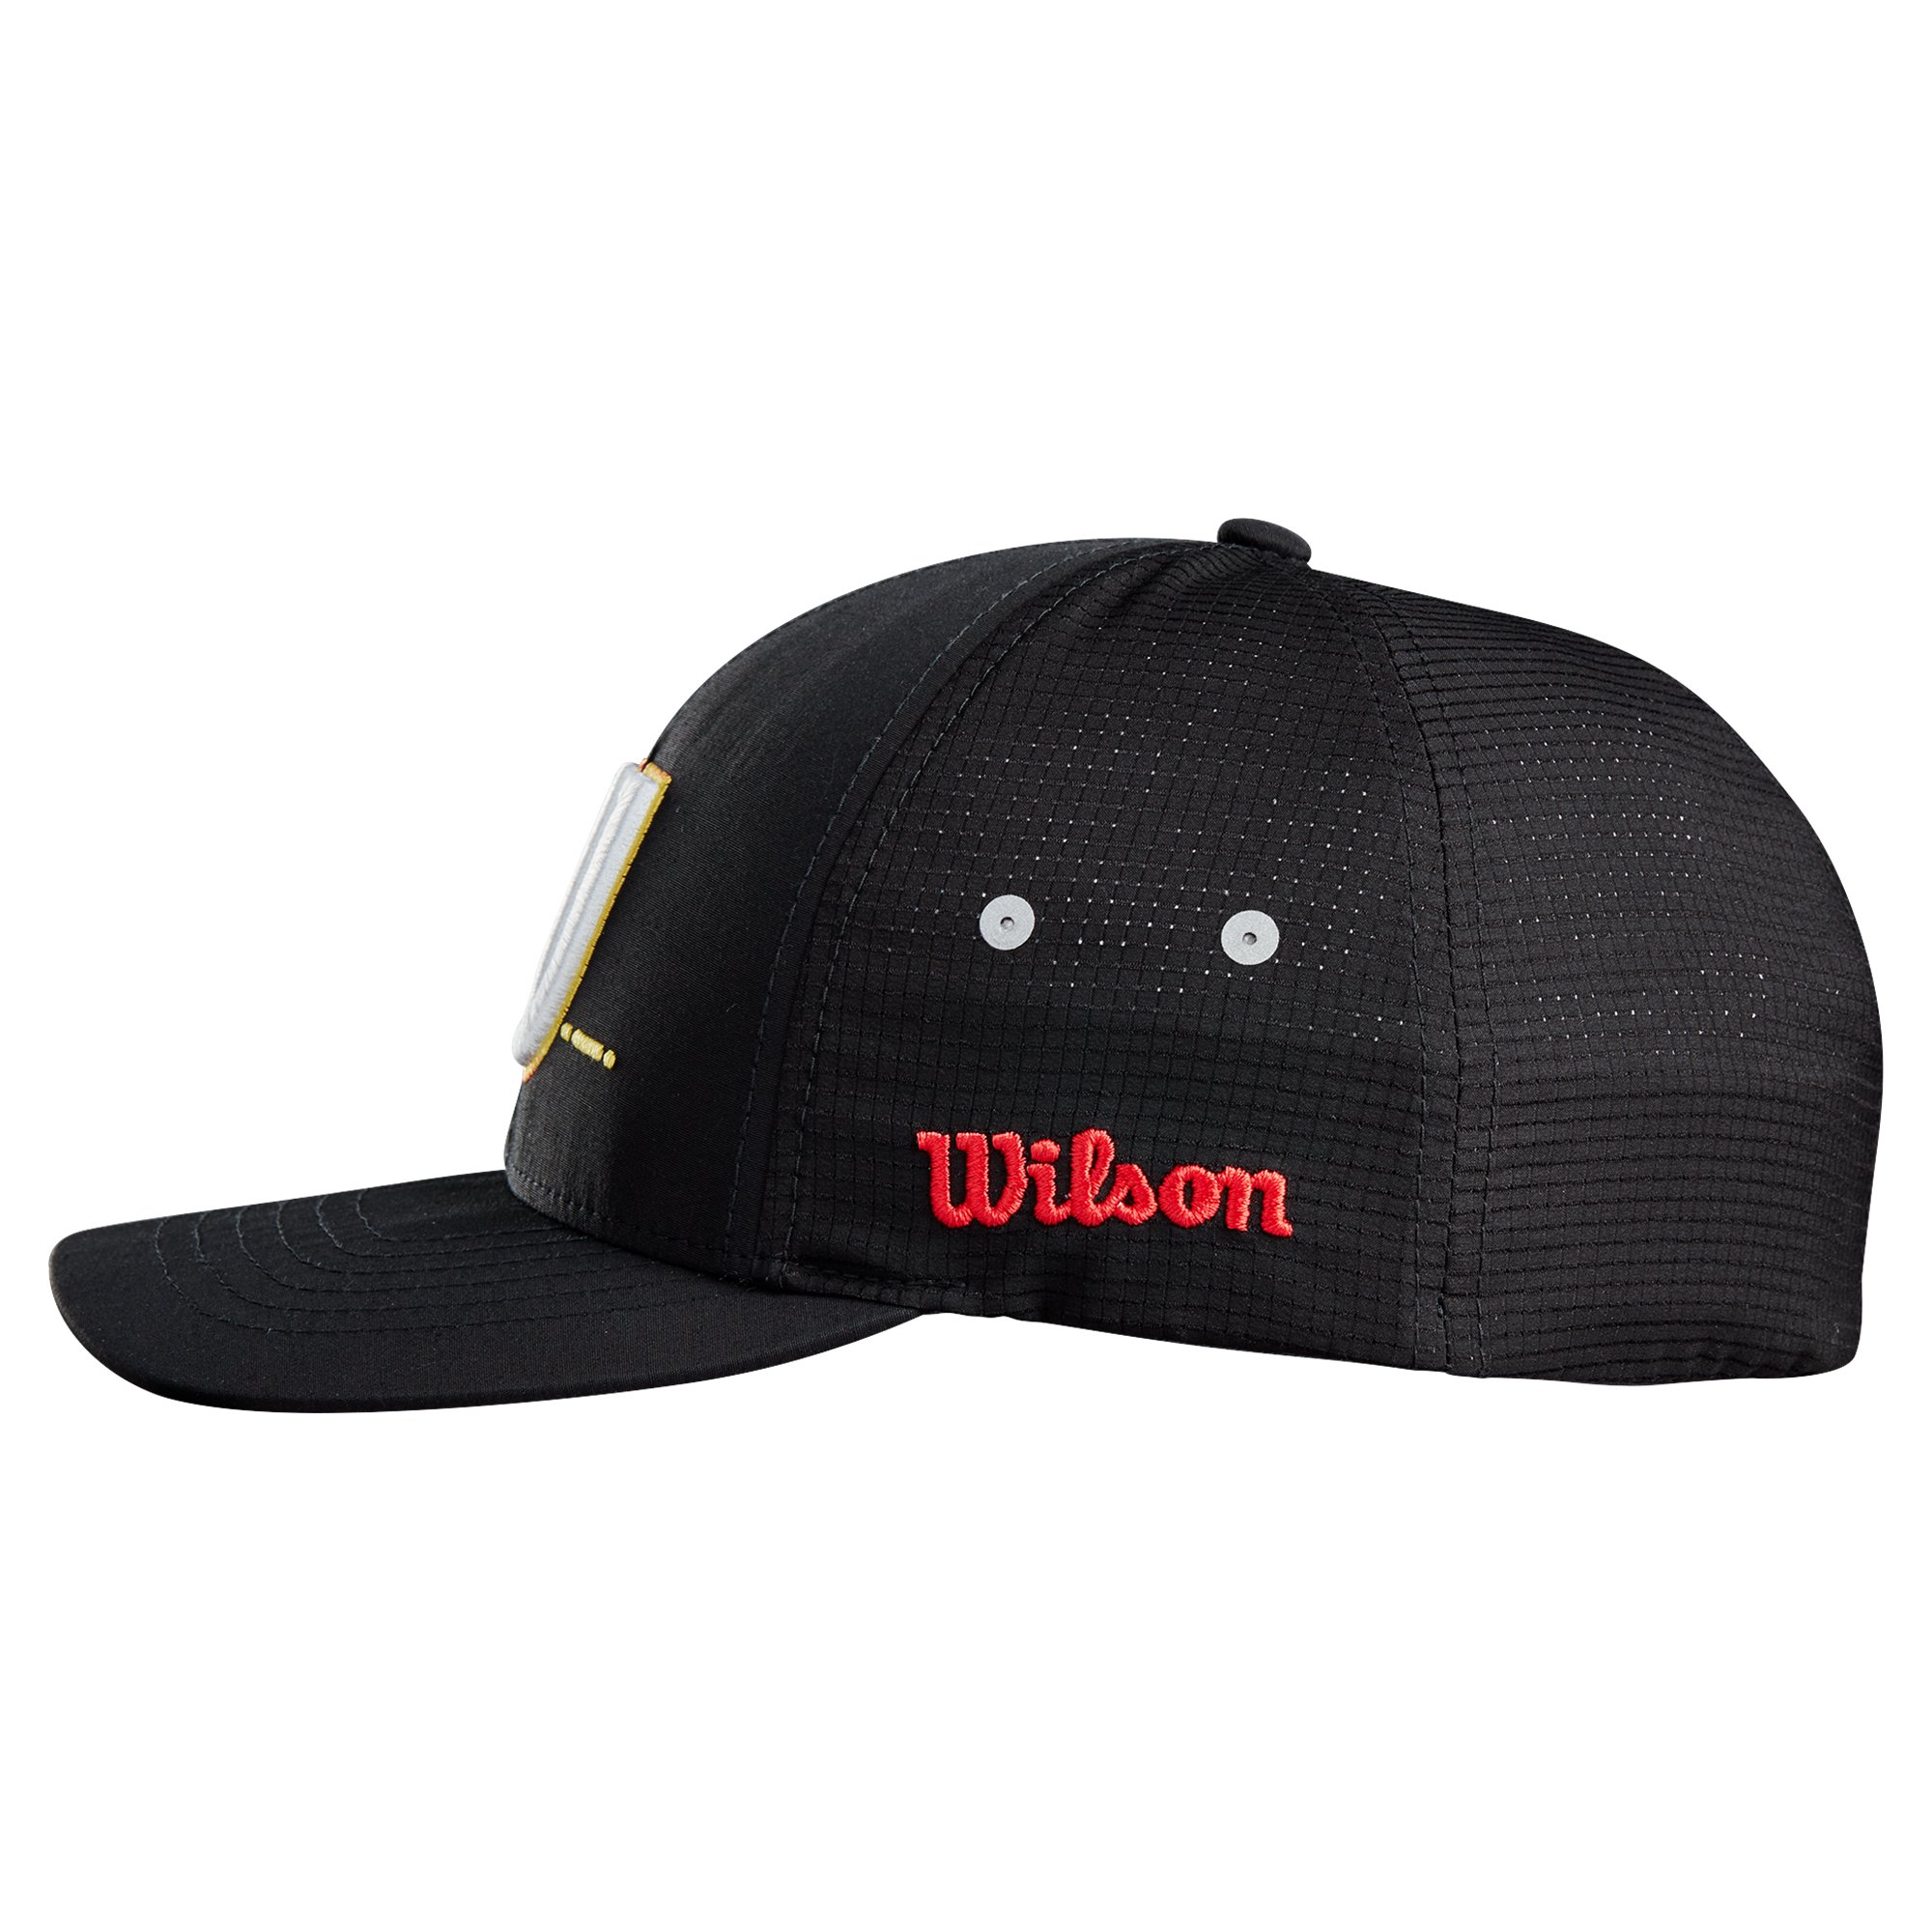 Wilson Volleyball Cap